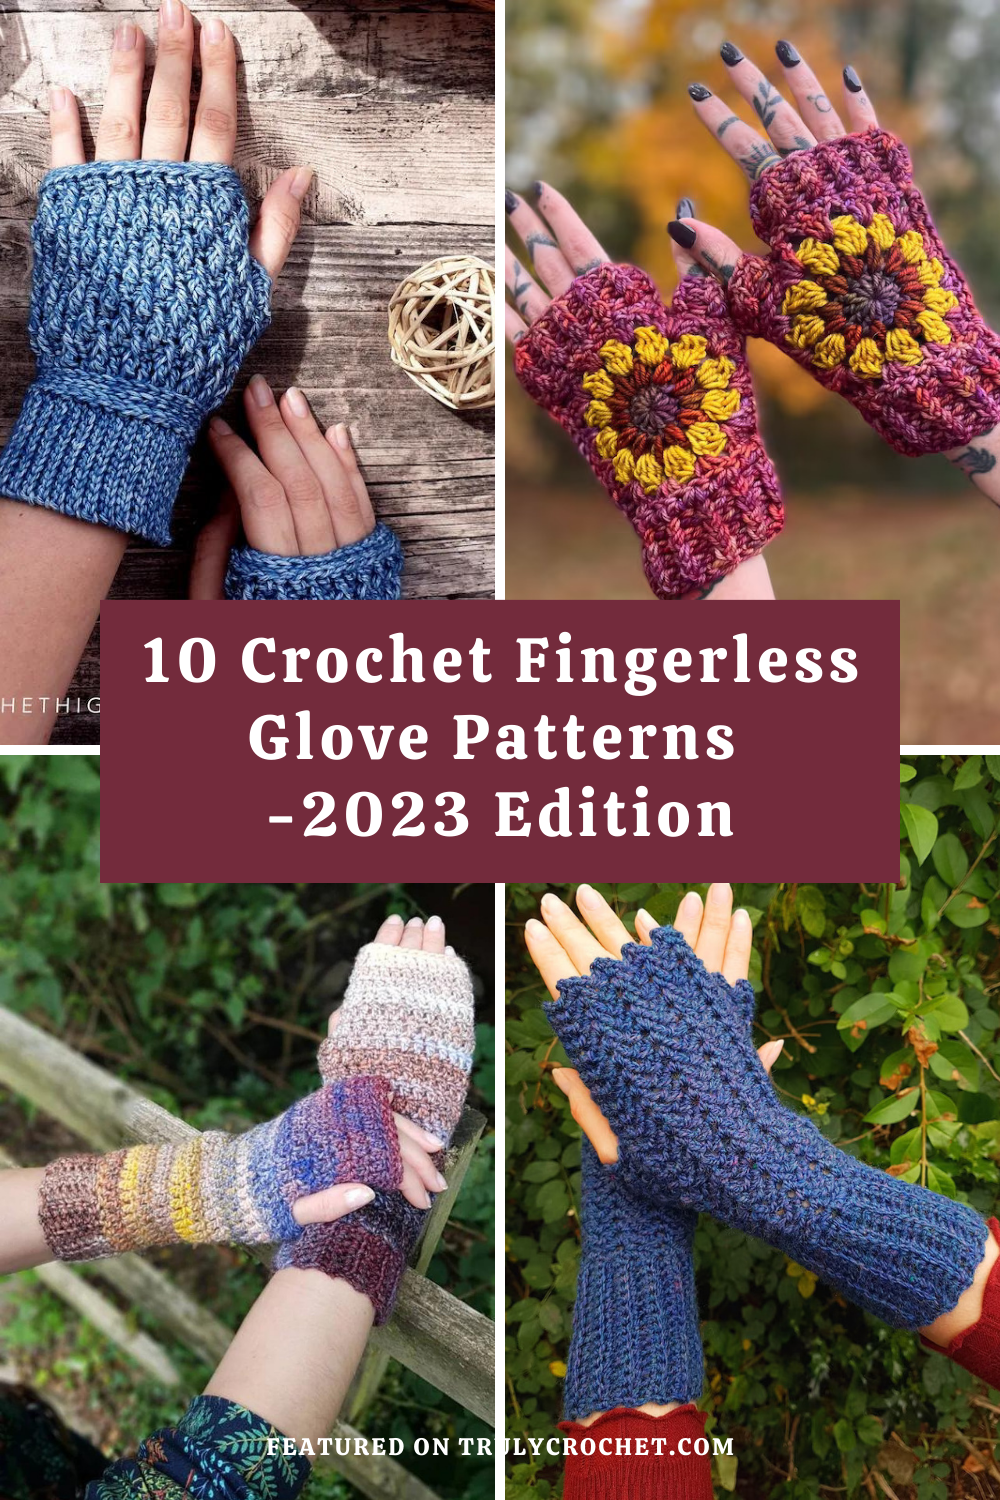 10 Crochet Fingerless Glove Patterns - 2023 Edition - Truly Crochet